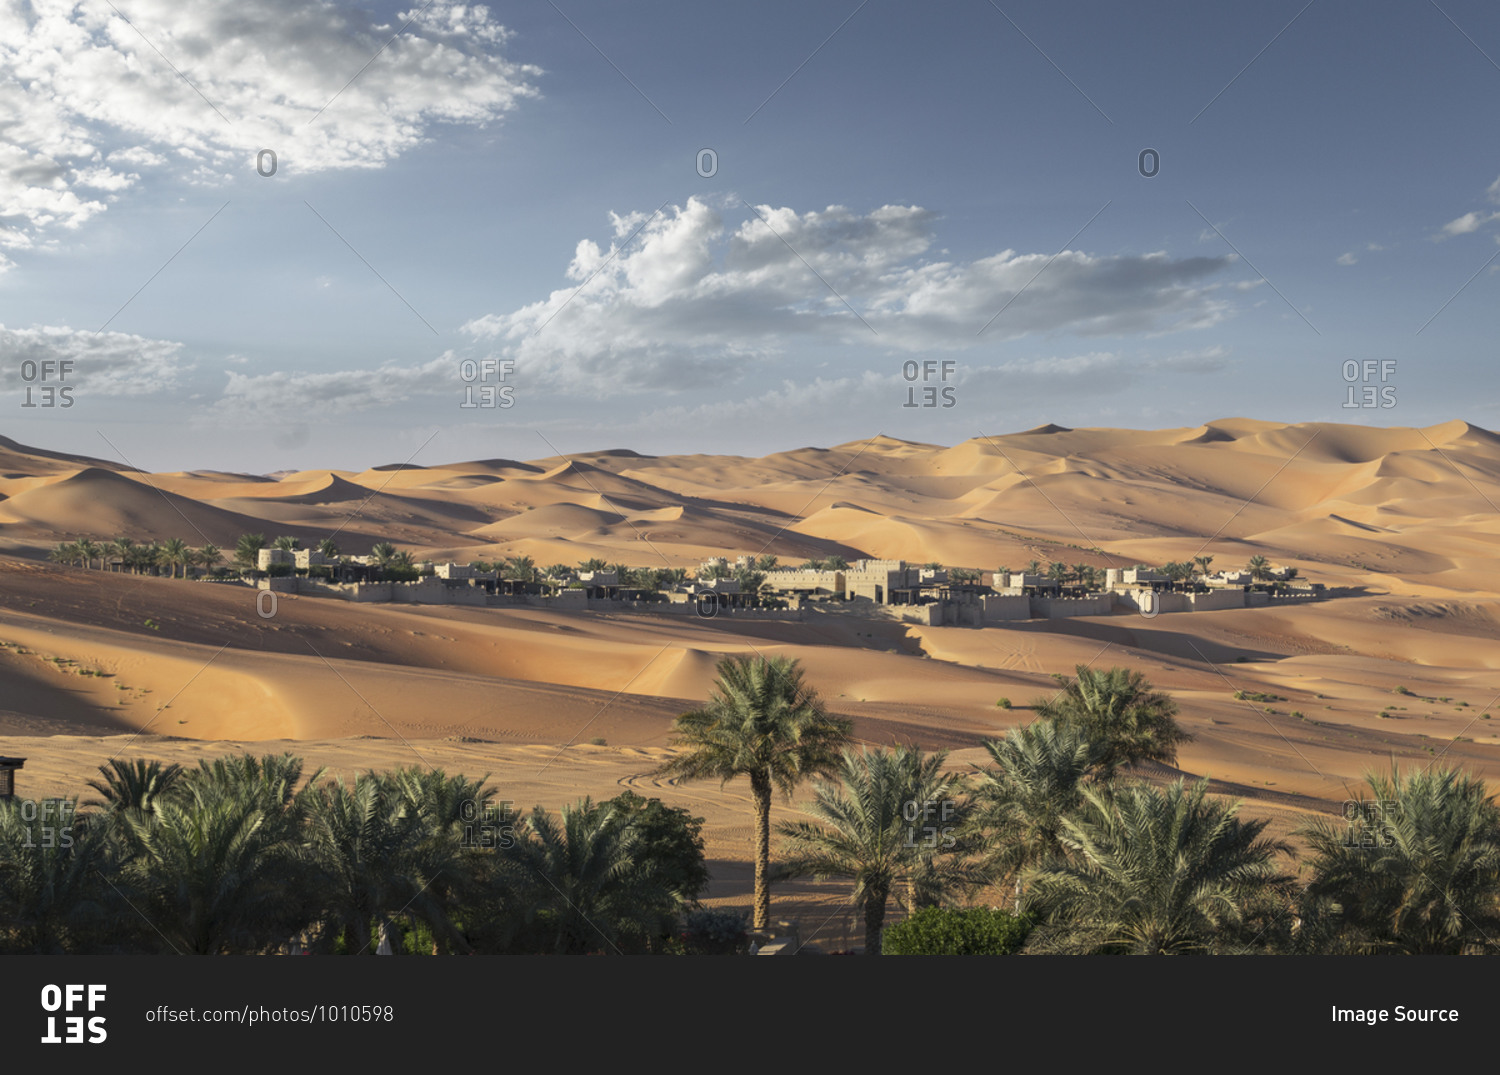 Distant view of Qsar Al Sarab desert resort among sand dunes, Empty Quarter Desert, Abu Dhabi, United Arab Emirate